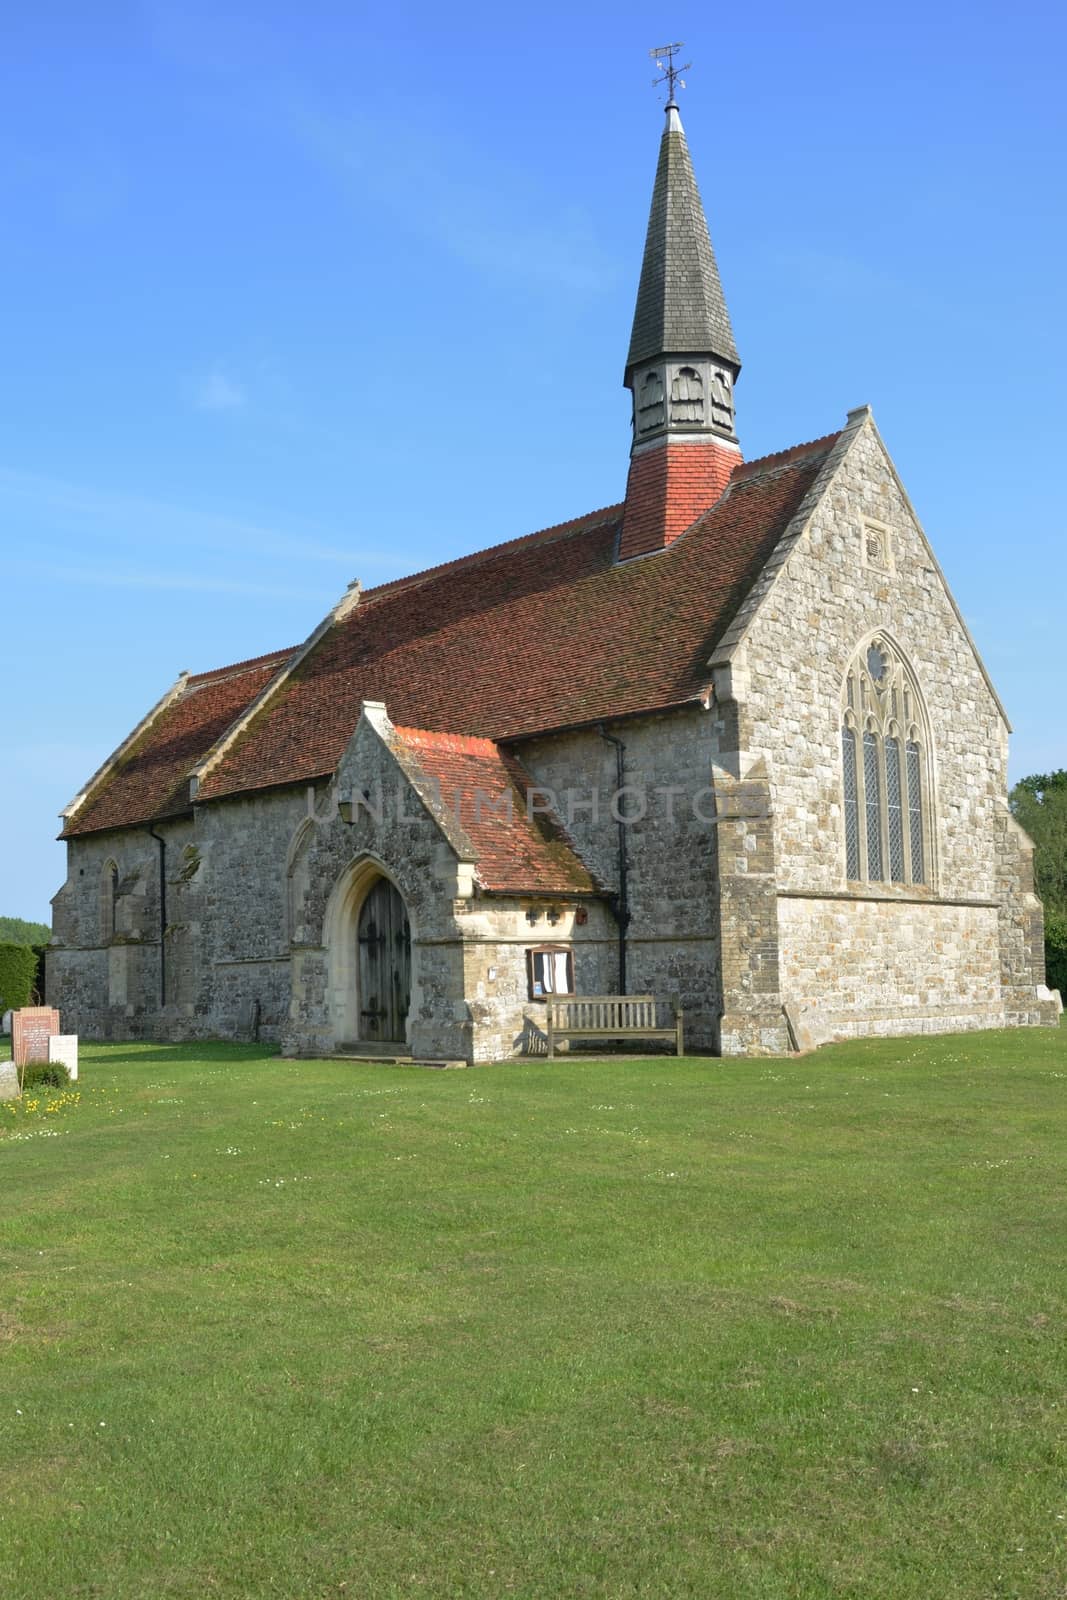 English parish church by pauws99